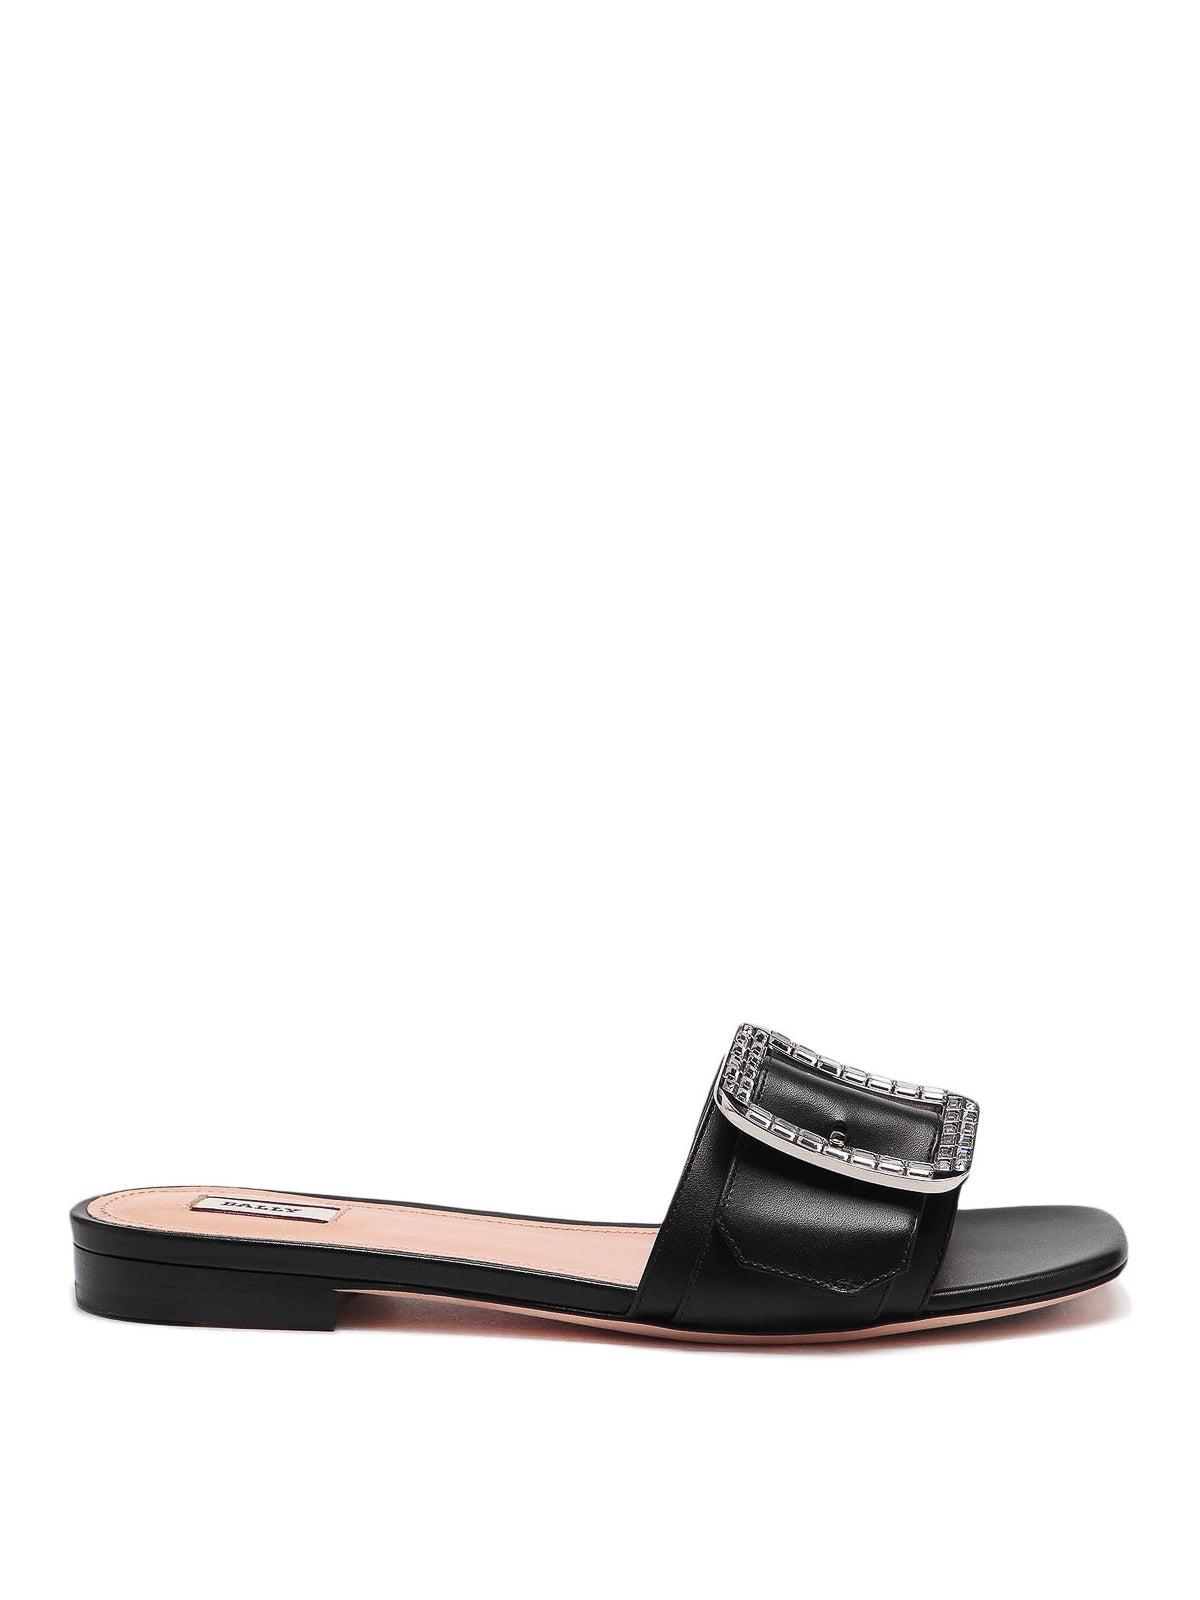 Bally Janna leather slide sandals- Black Lamb Plain